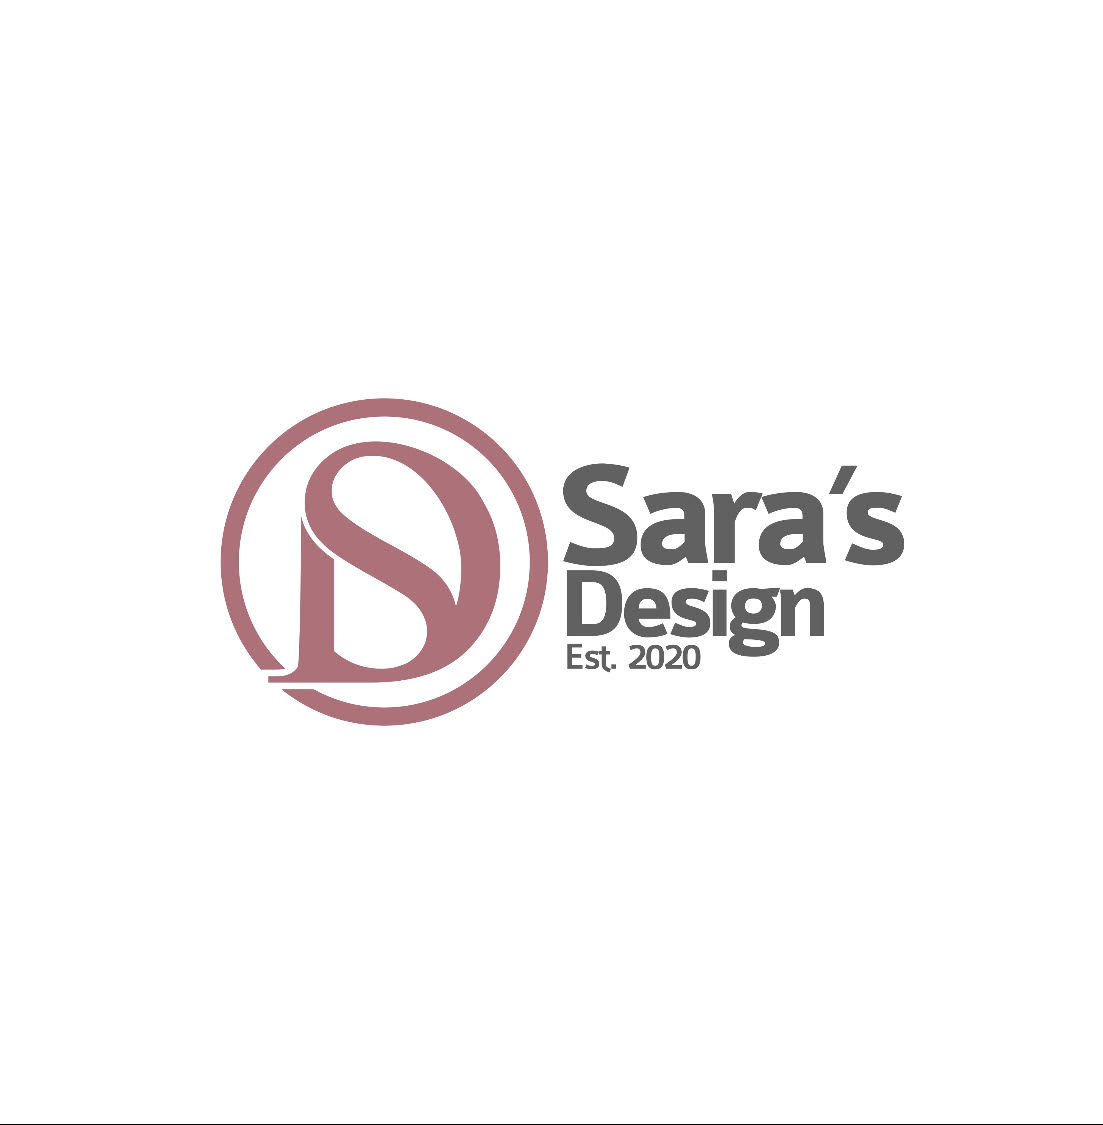 Sara’s Design